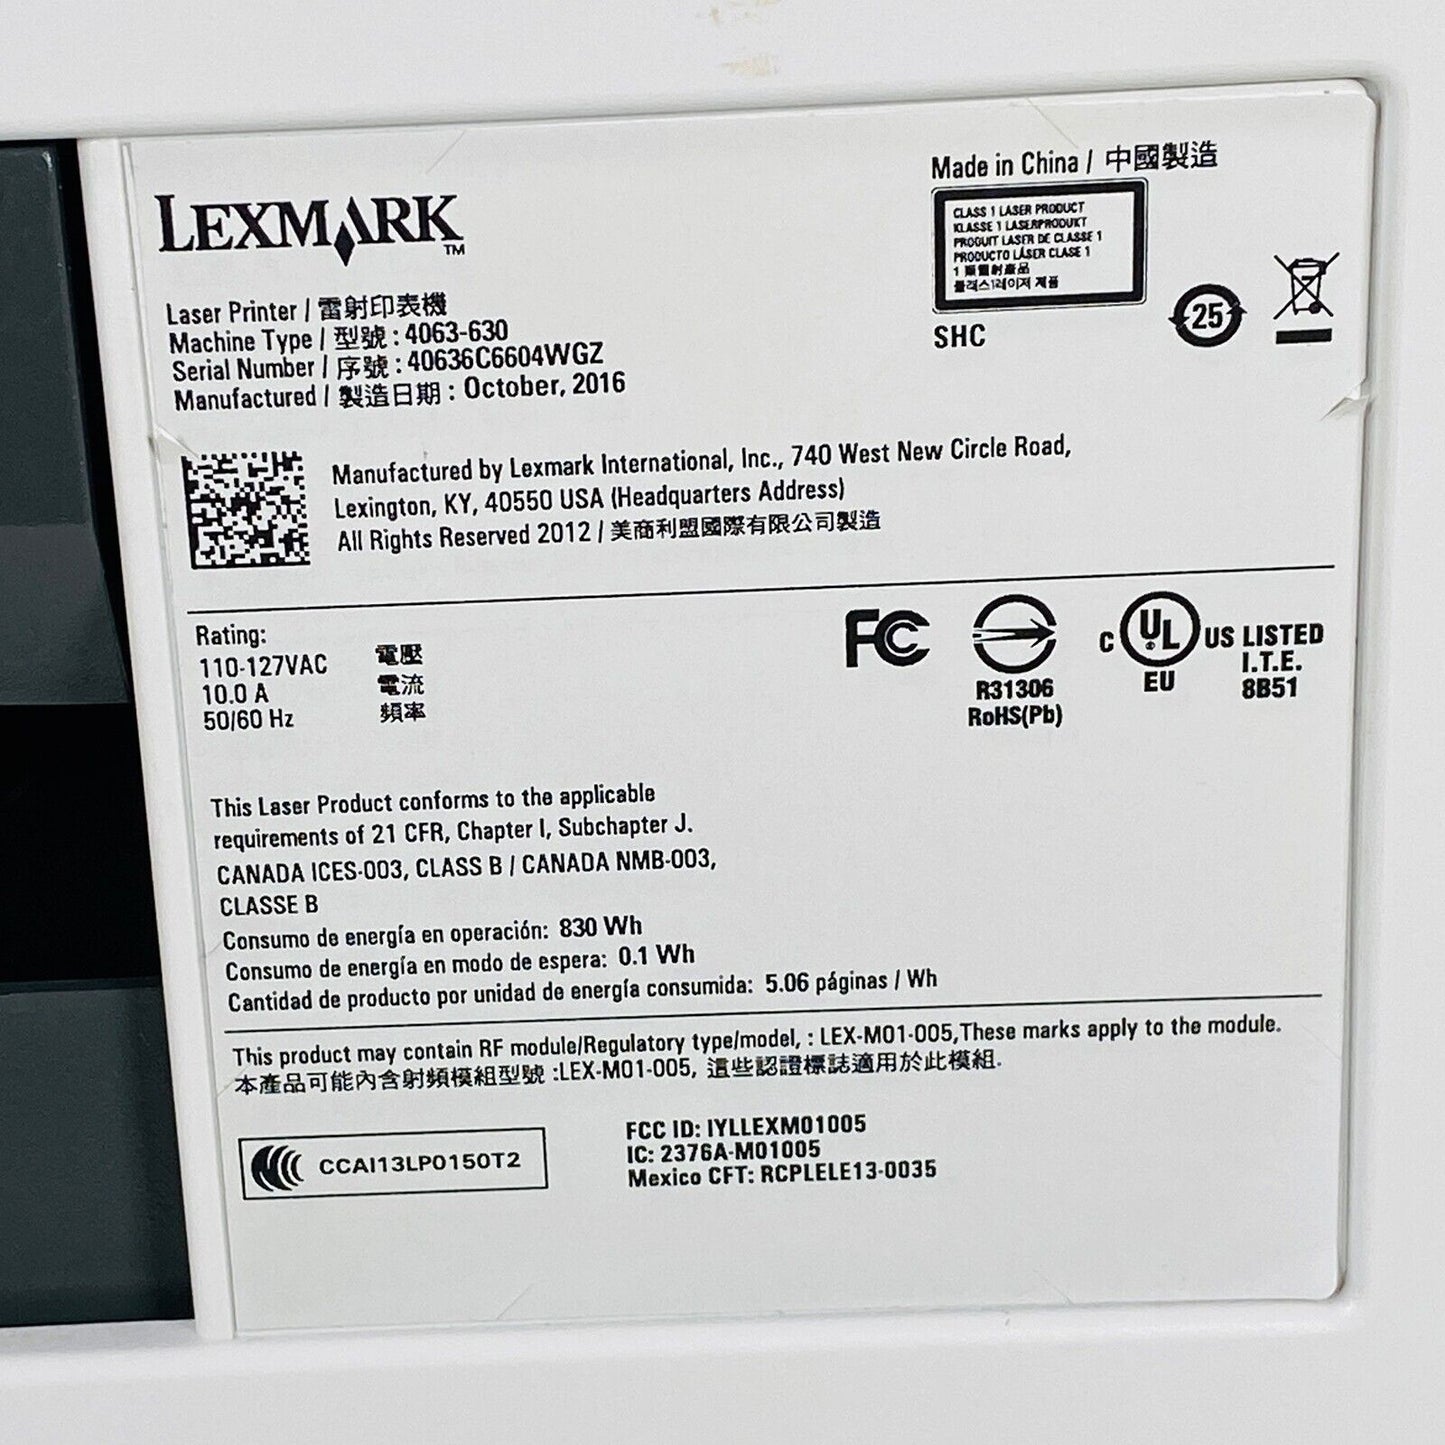 Lexmark MS812dn 4063-630 WorkGroup Laser Printer